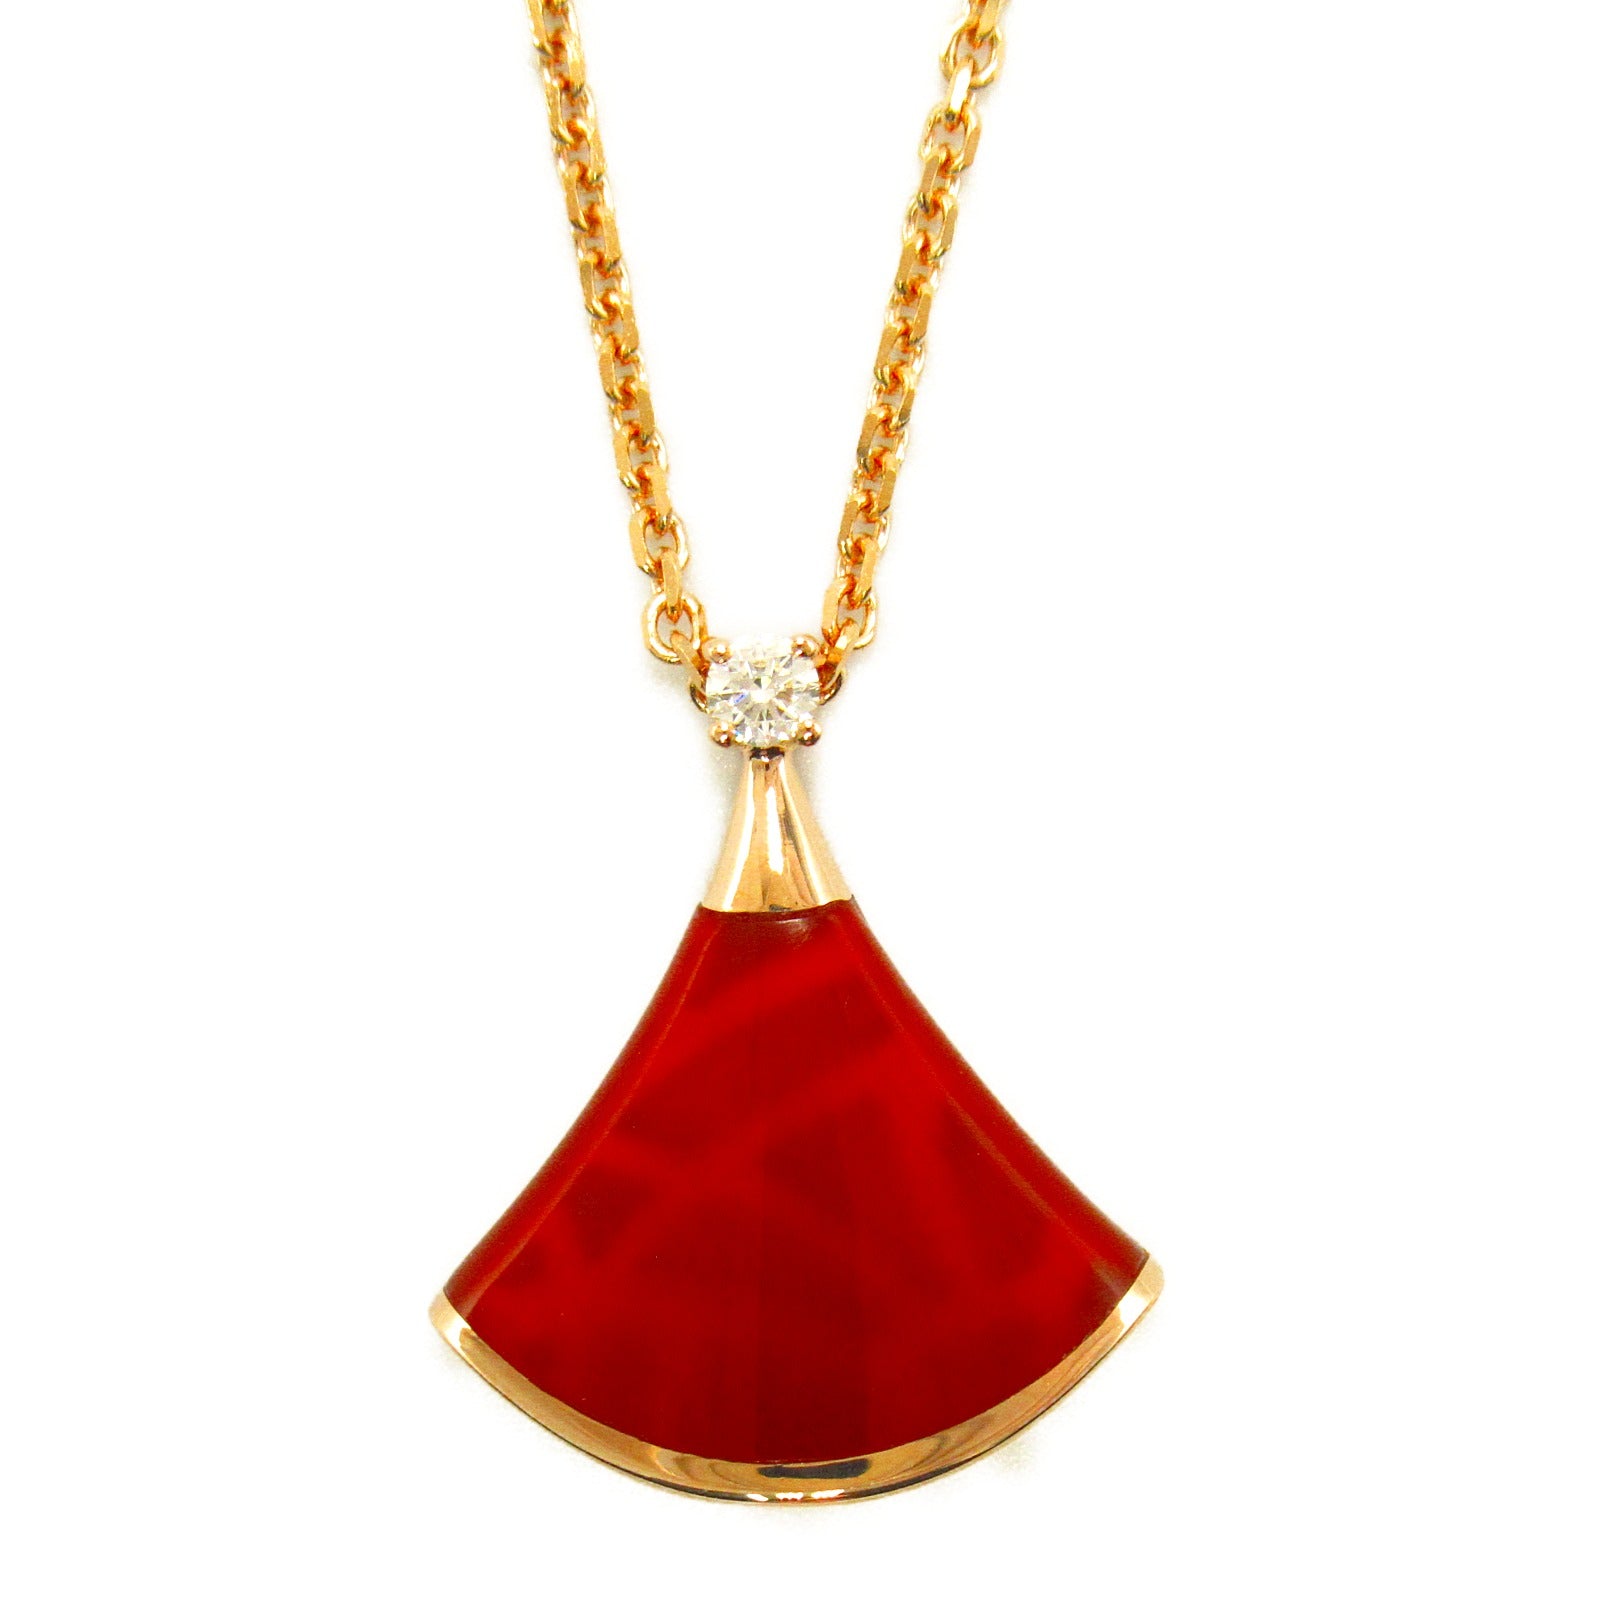 Bulgari BVLGARI n diamond necklace necklace jewelry K18PG (pink g) diamond  clearance